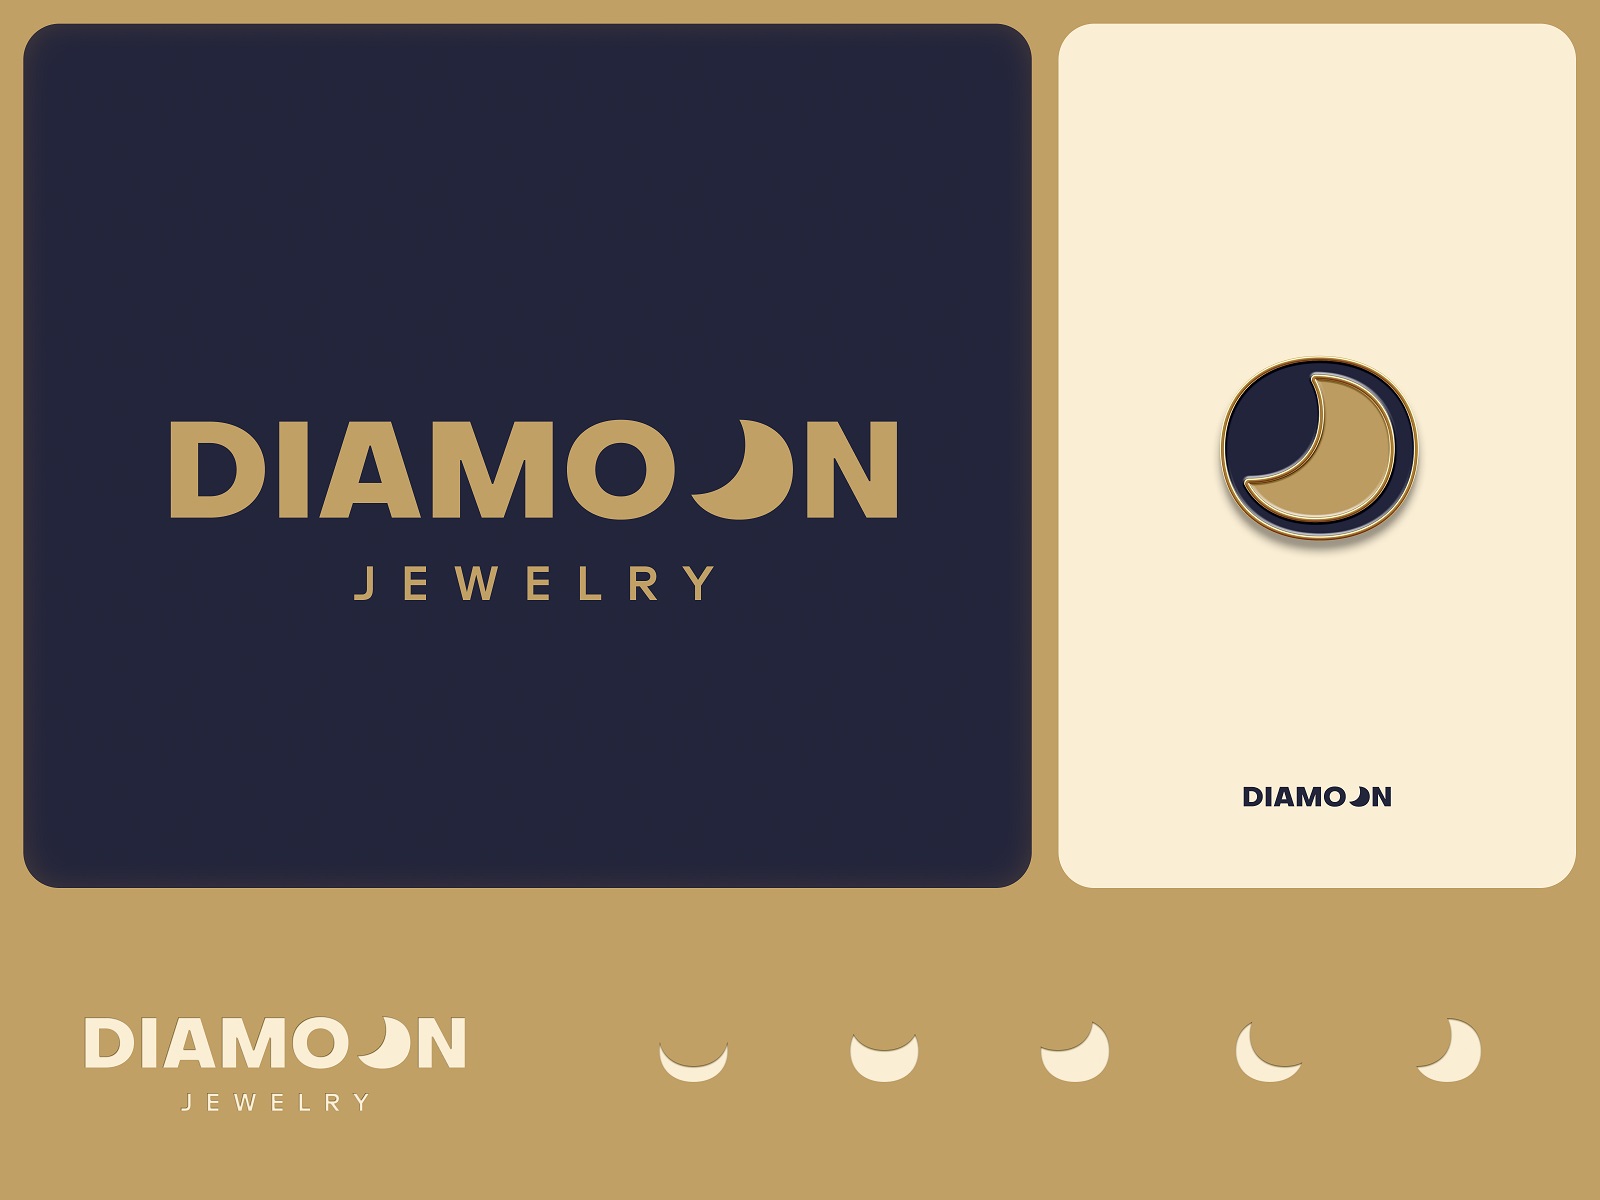 Diamoon_logo design tubik